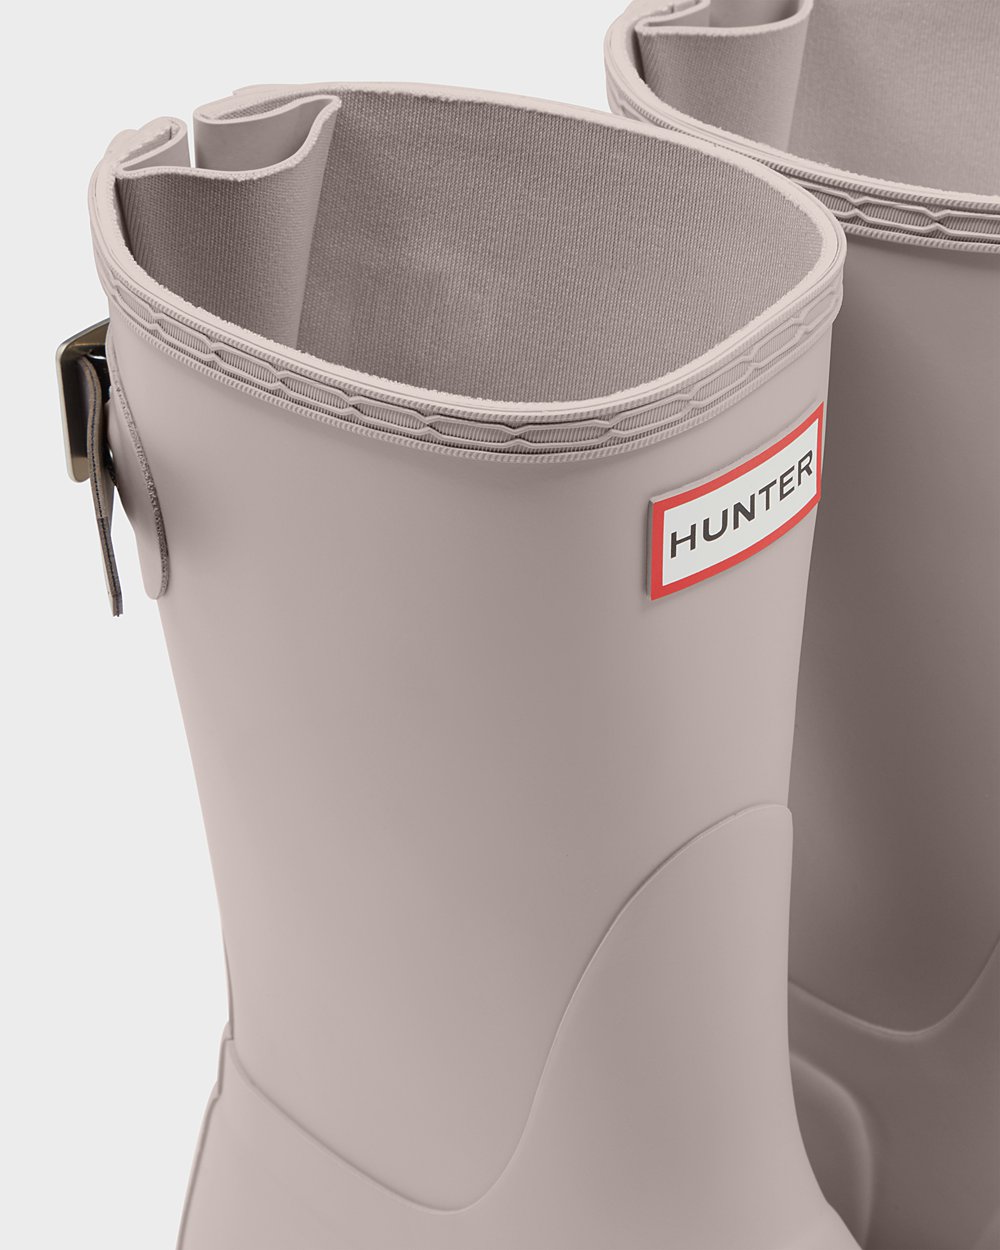 Womens Short Rain Boots - Hunter Original Back Adjustable (05MIKZRUA) - Grey